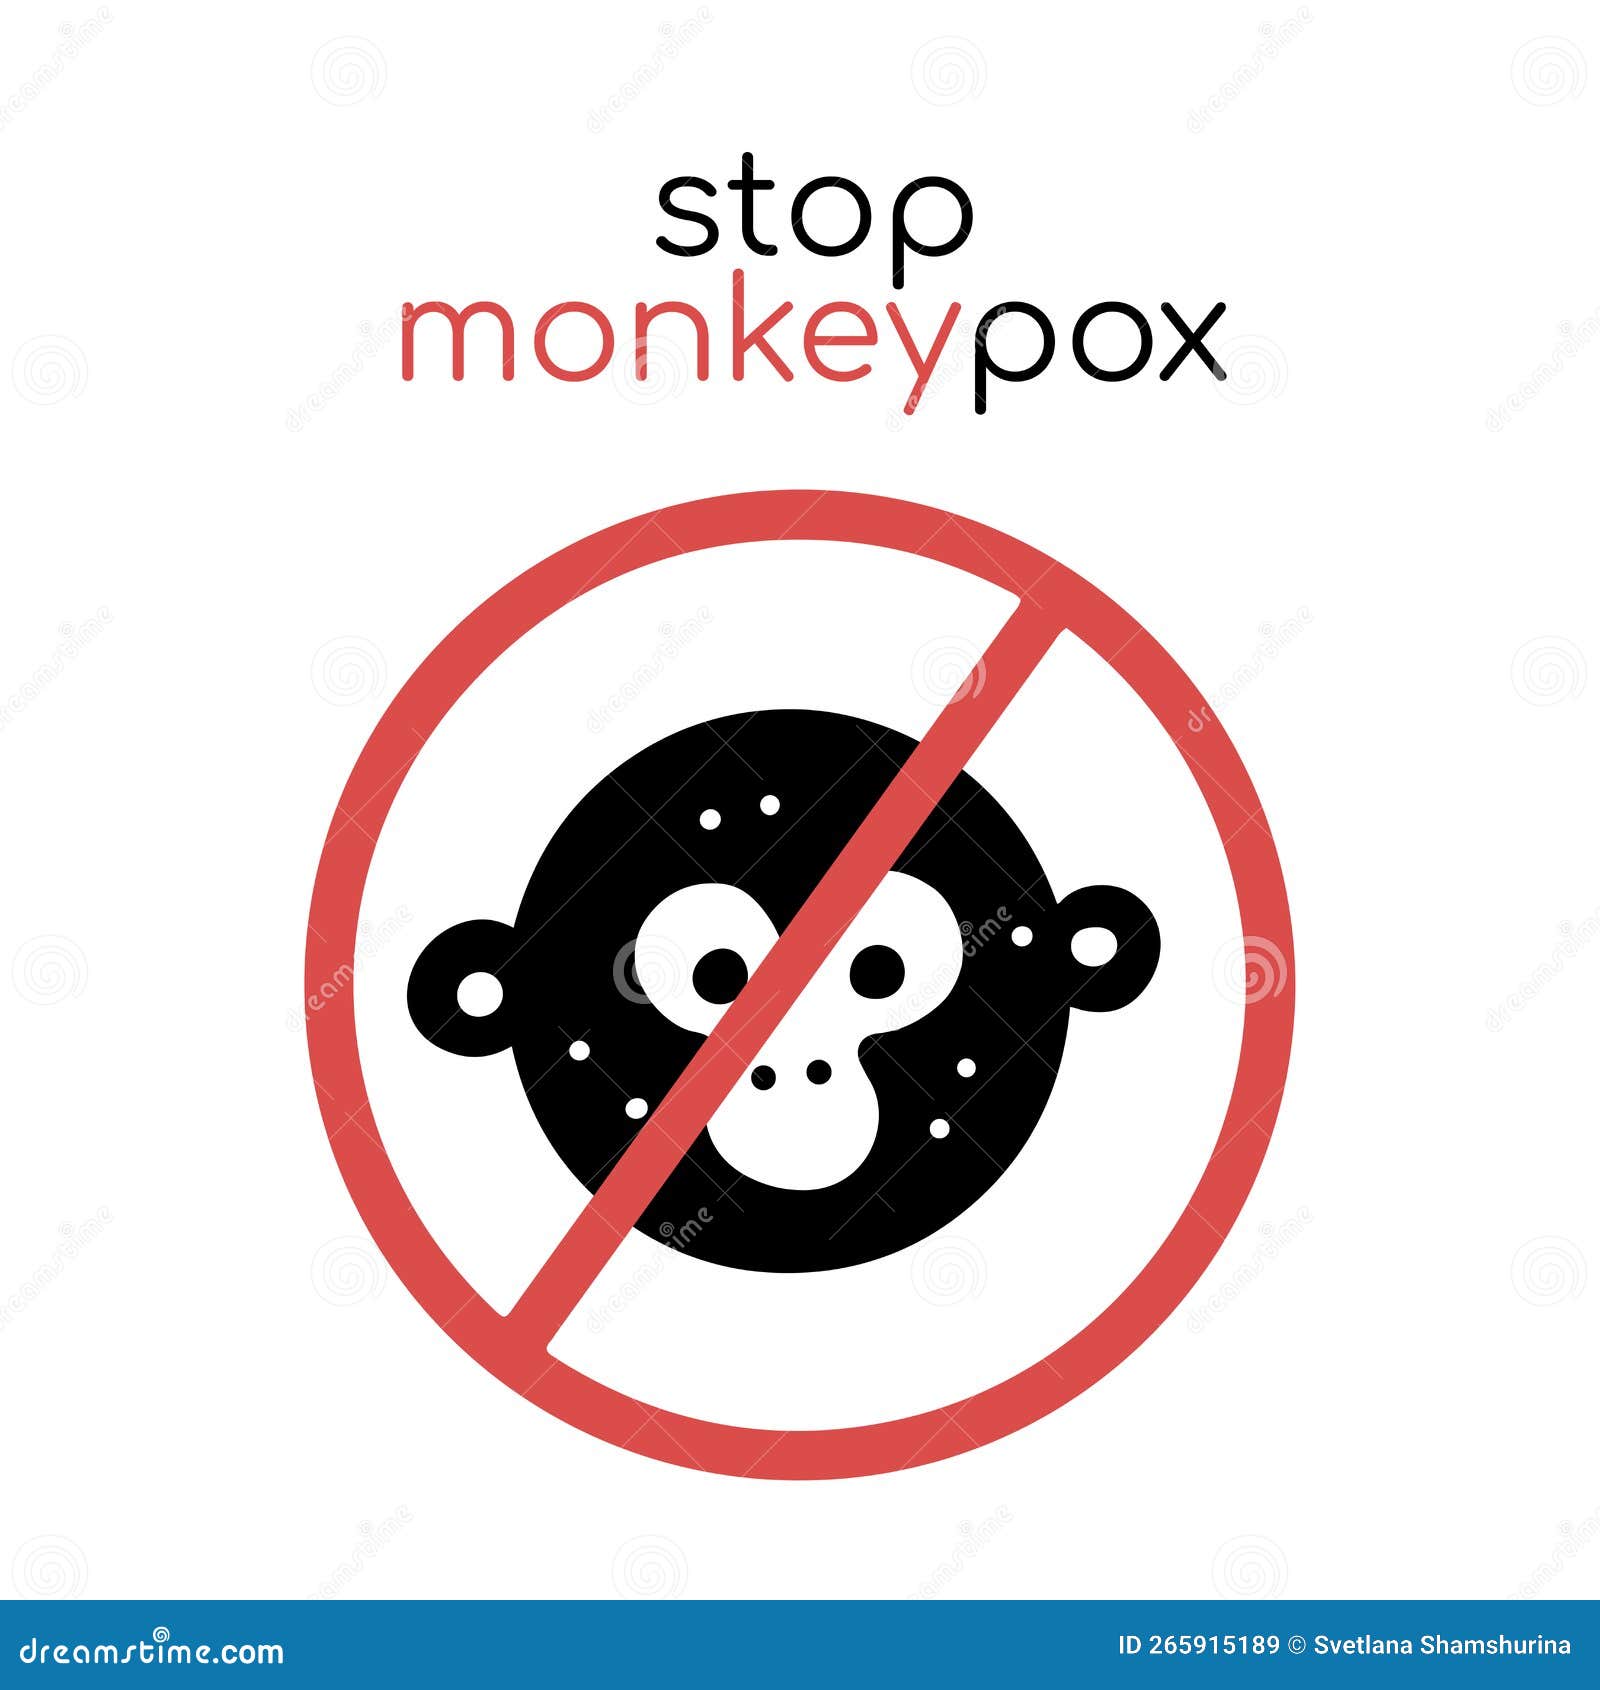 monkeypox stop sign. crossed chimp's face. monkeypox infection pandemic. new virus, epidemic, disease. epidemic